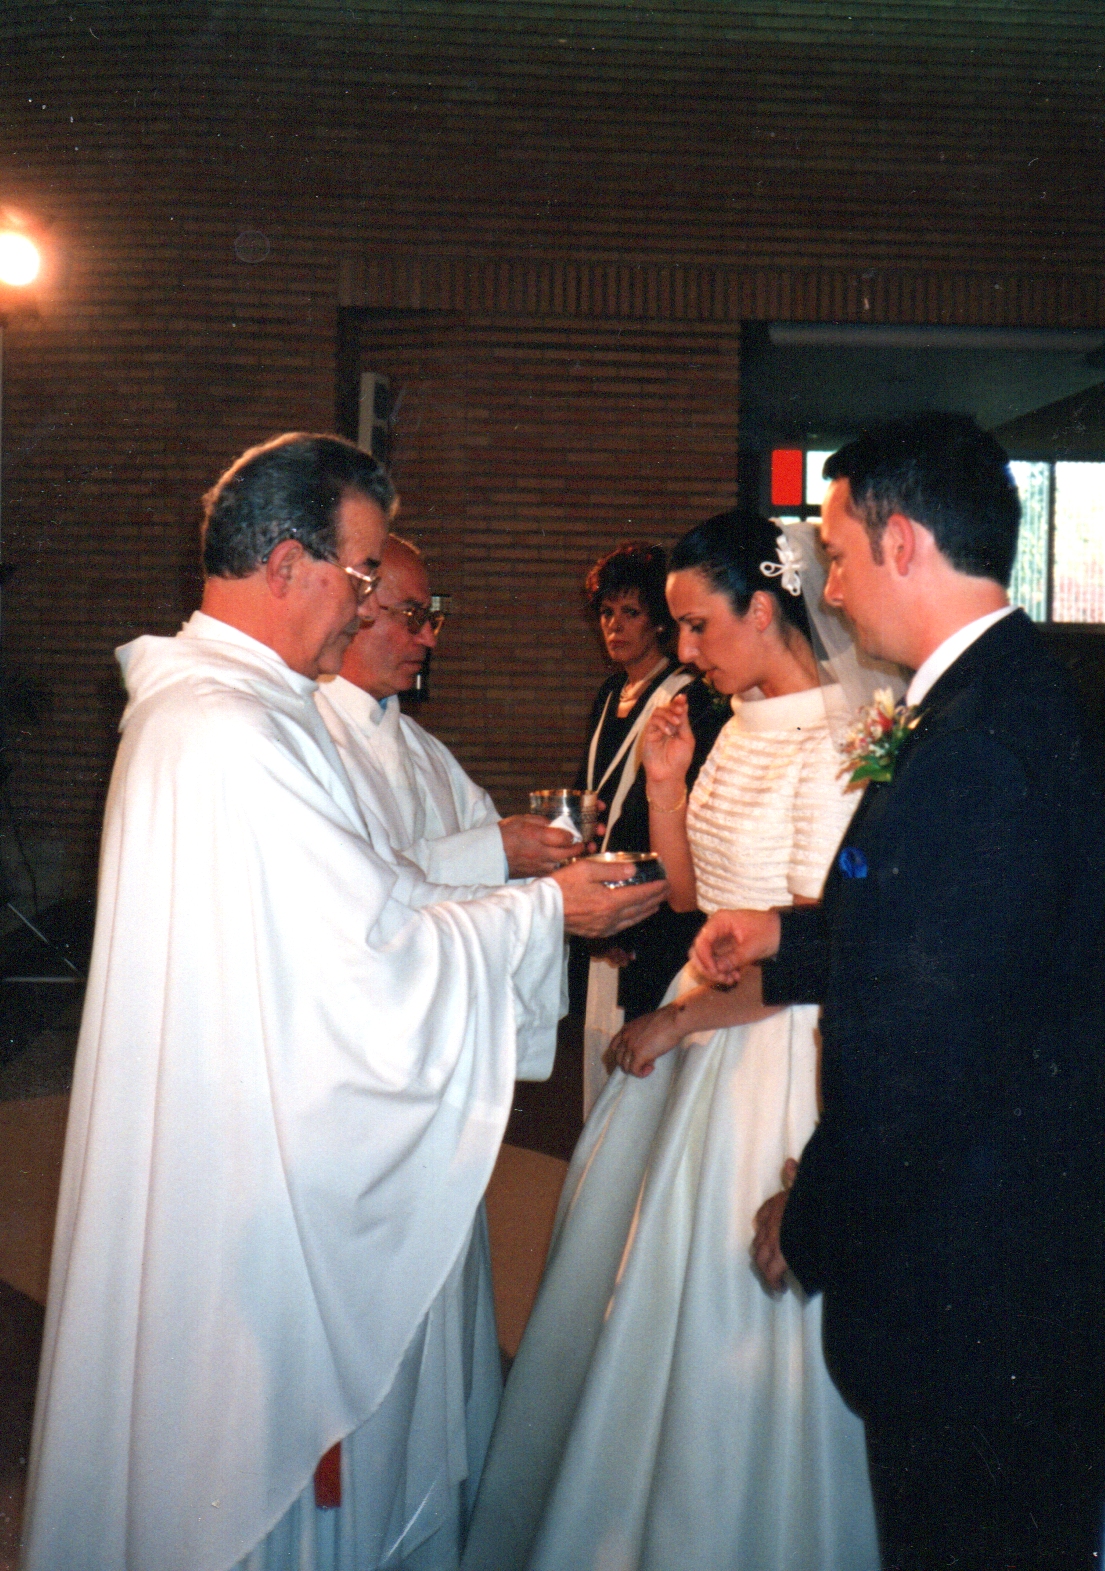 El sacramento del matrimonio